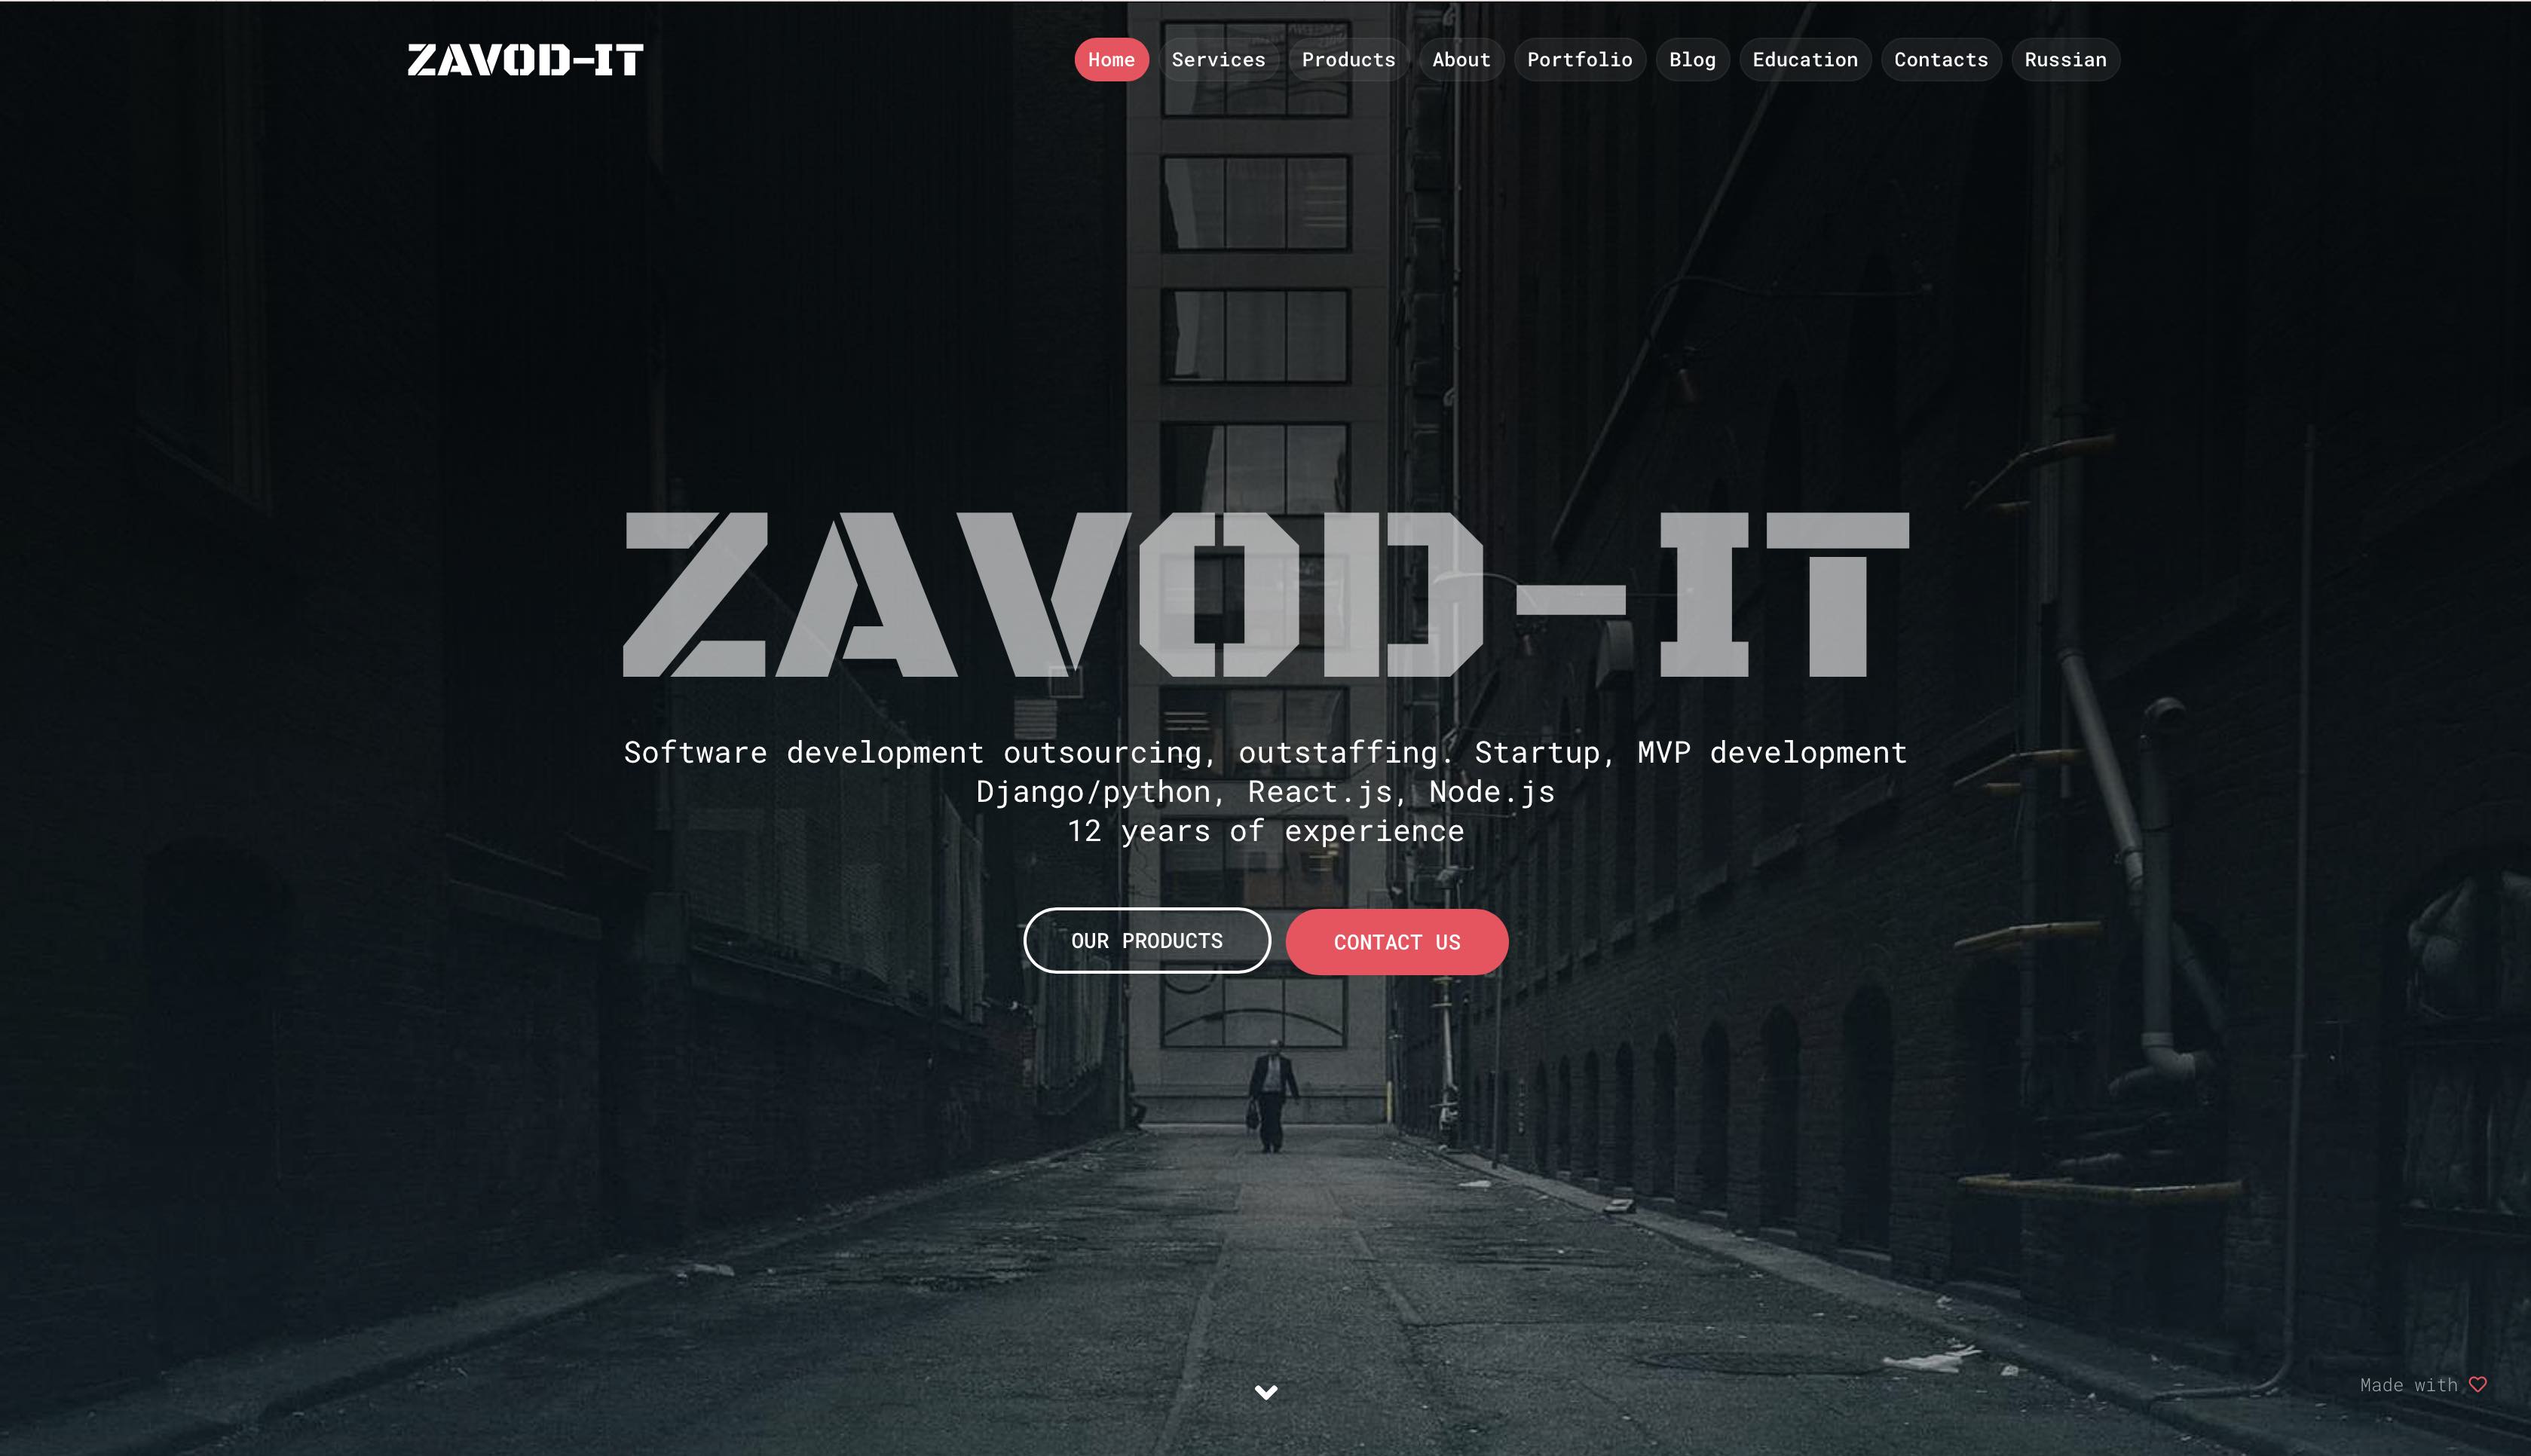 (c) Zavod-it.com